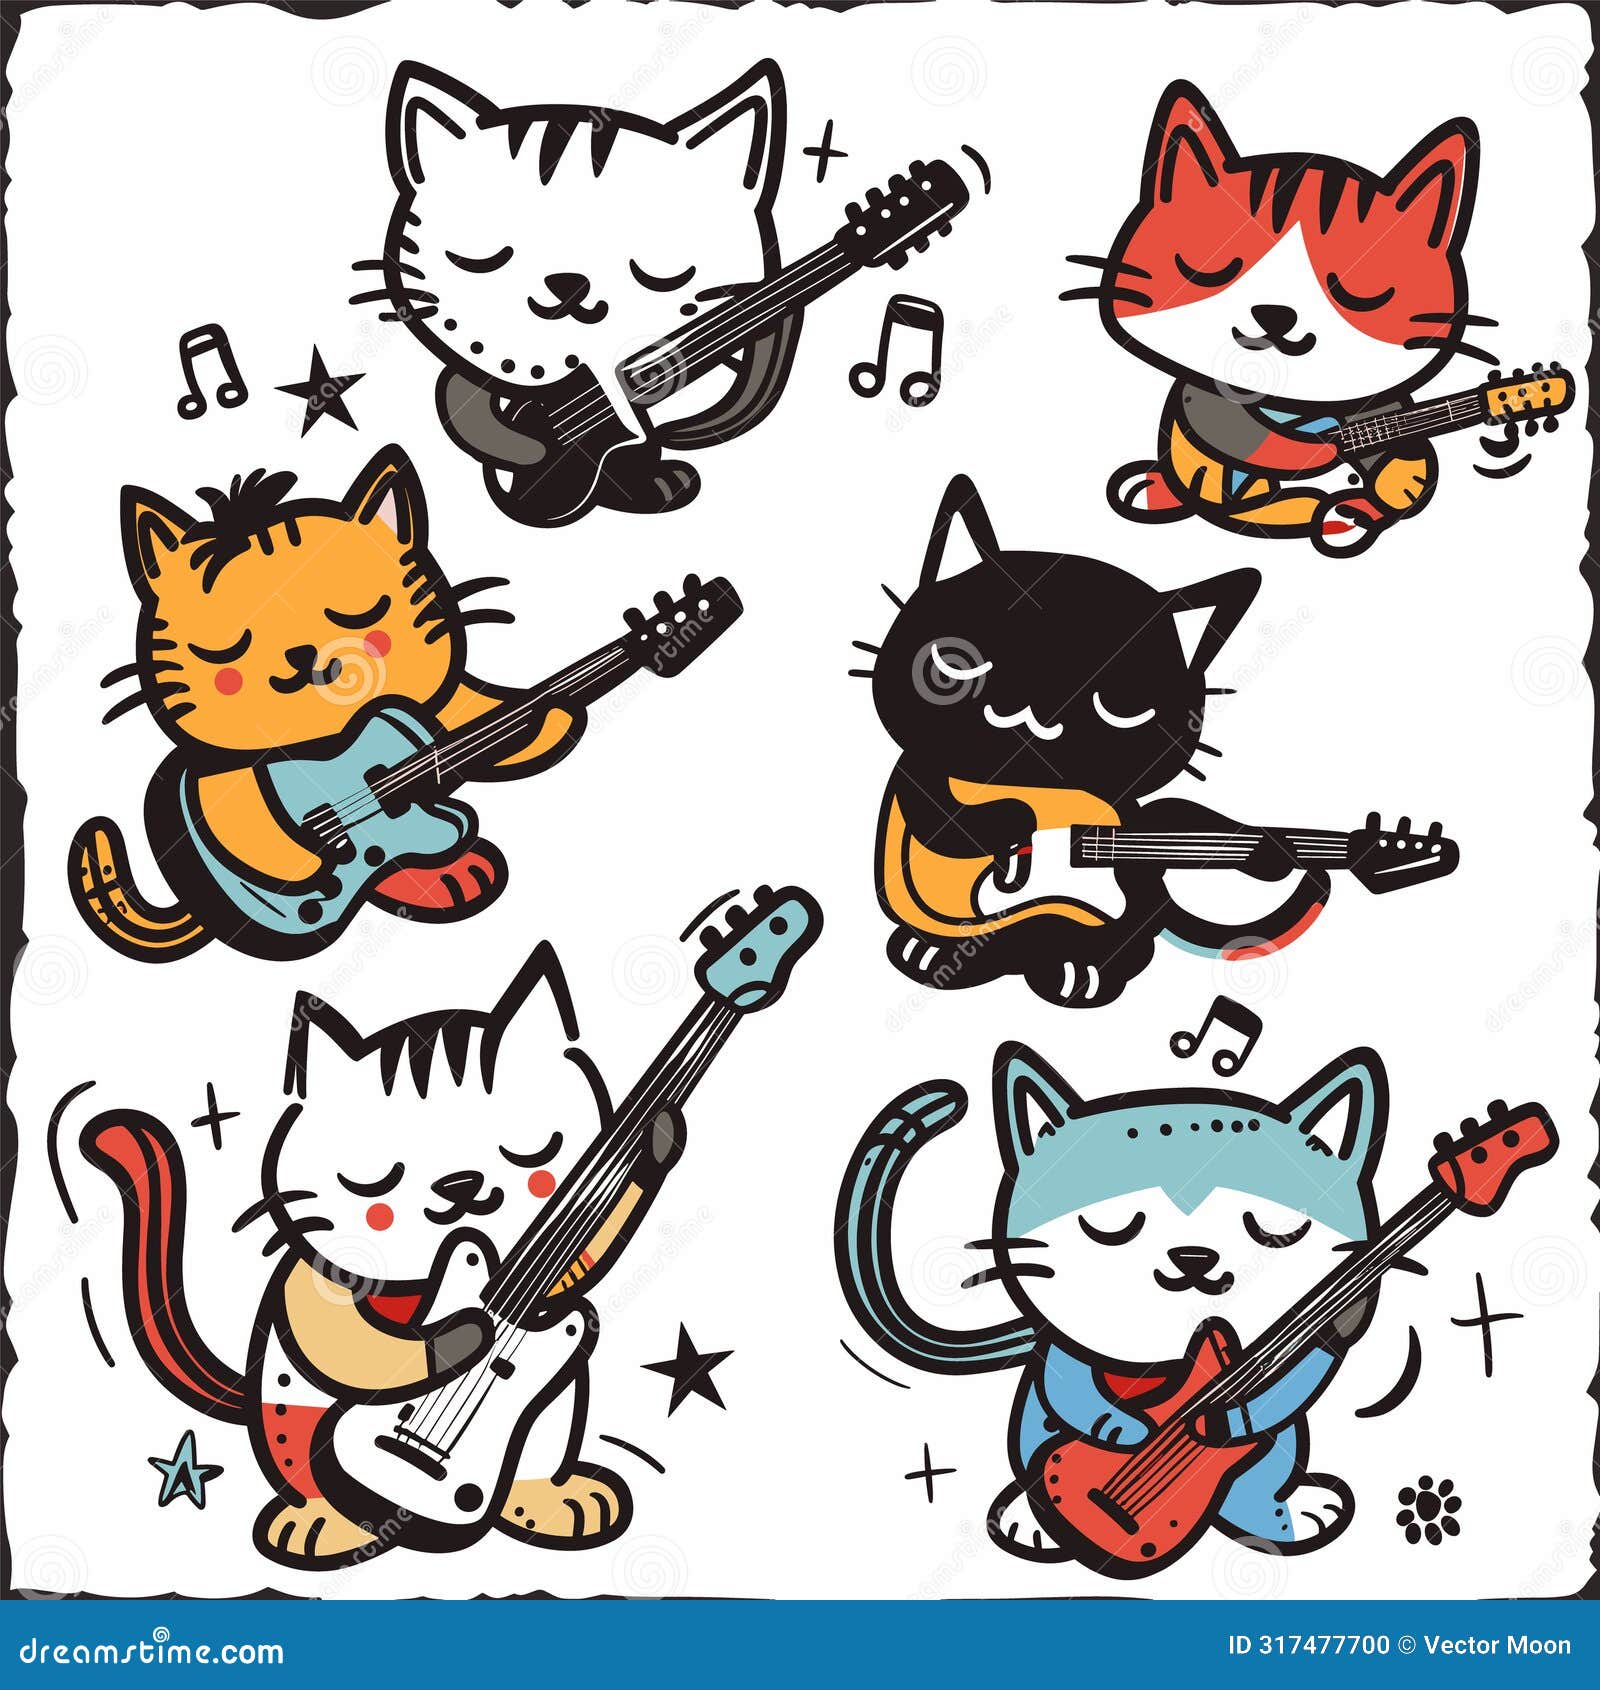 six cartoon cats playing guitars, musical notes surrounding them, cute feline band. cats strum